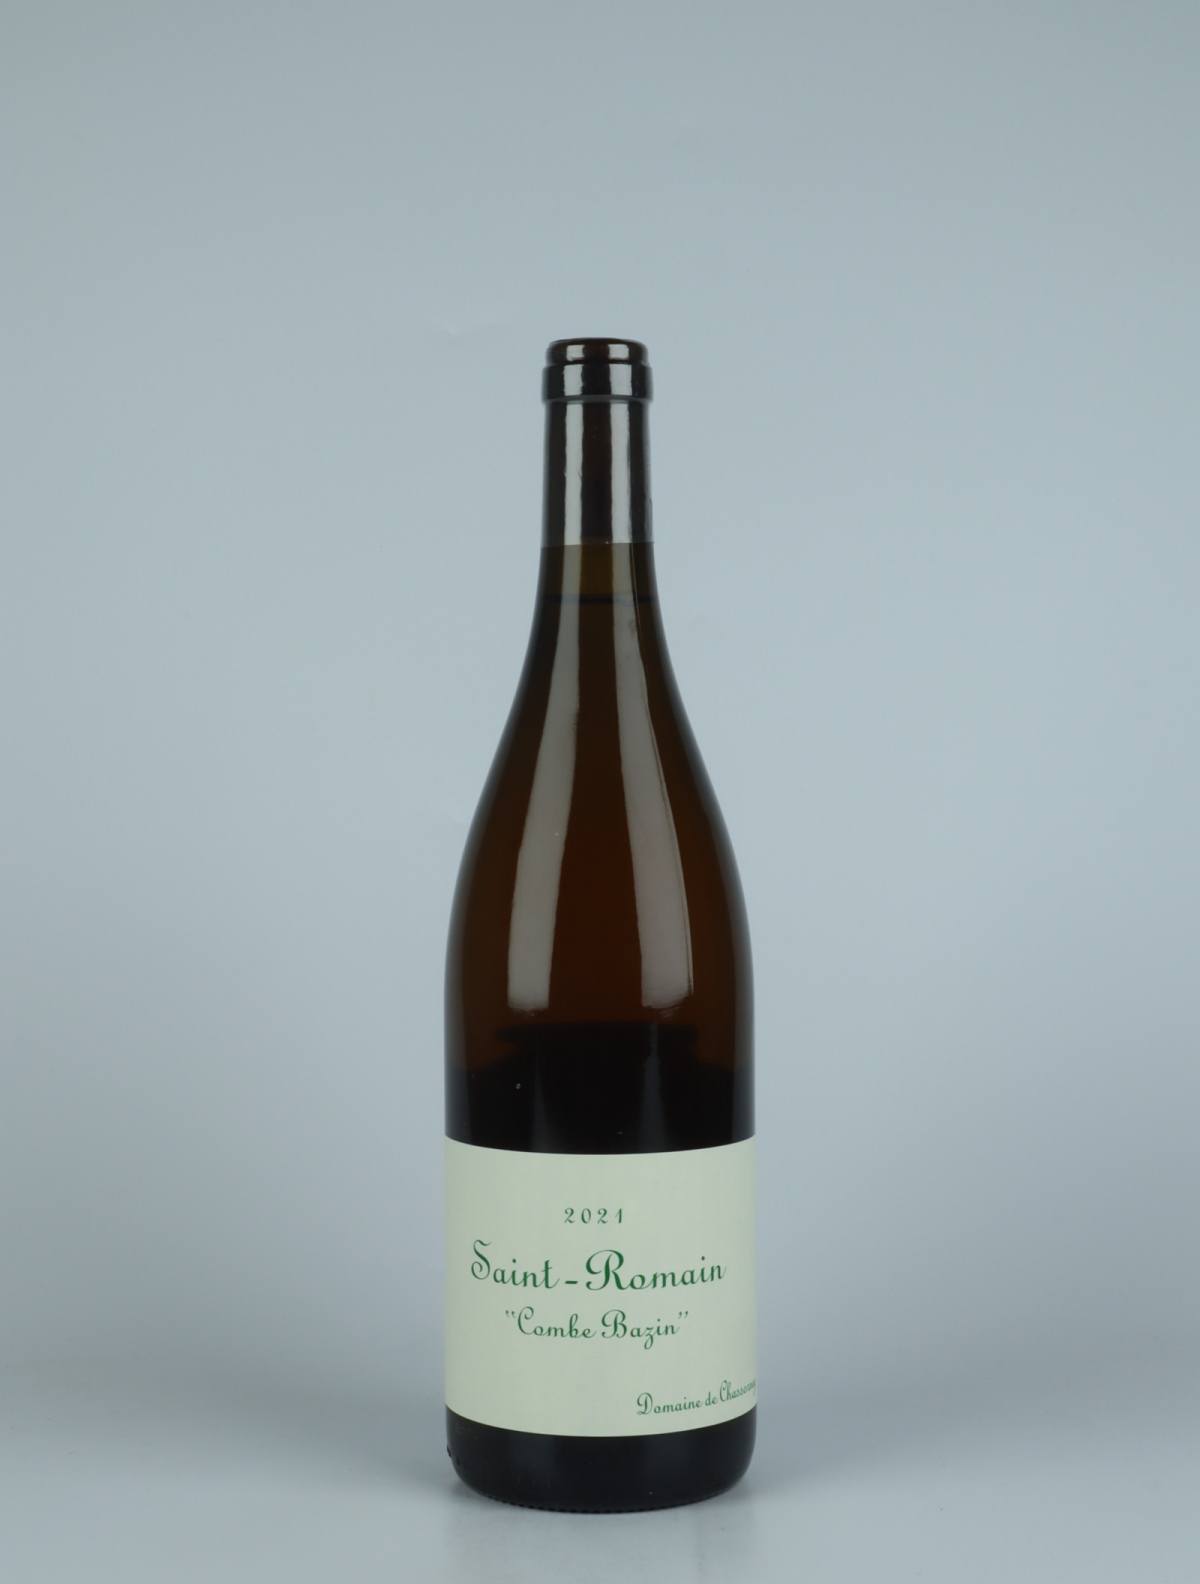 En flaske 2021 Saint Romain Blanc - Combe Bazin Hvidvin fra Domaine de Chassorney, Bourgogne i Frankrig